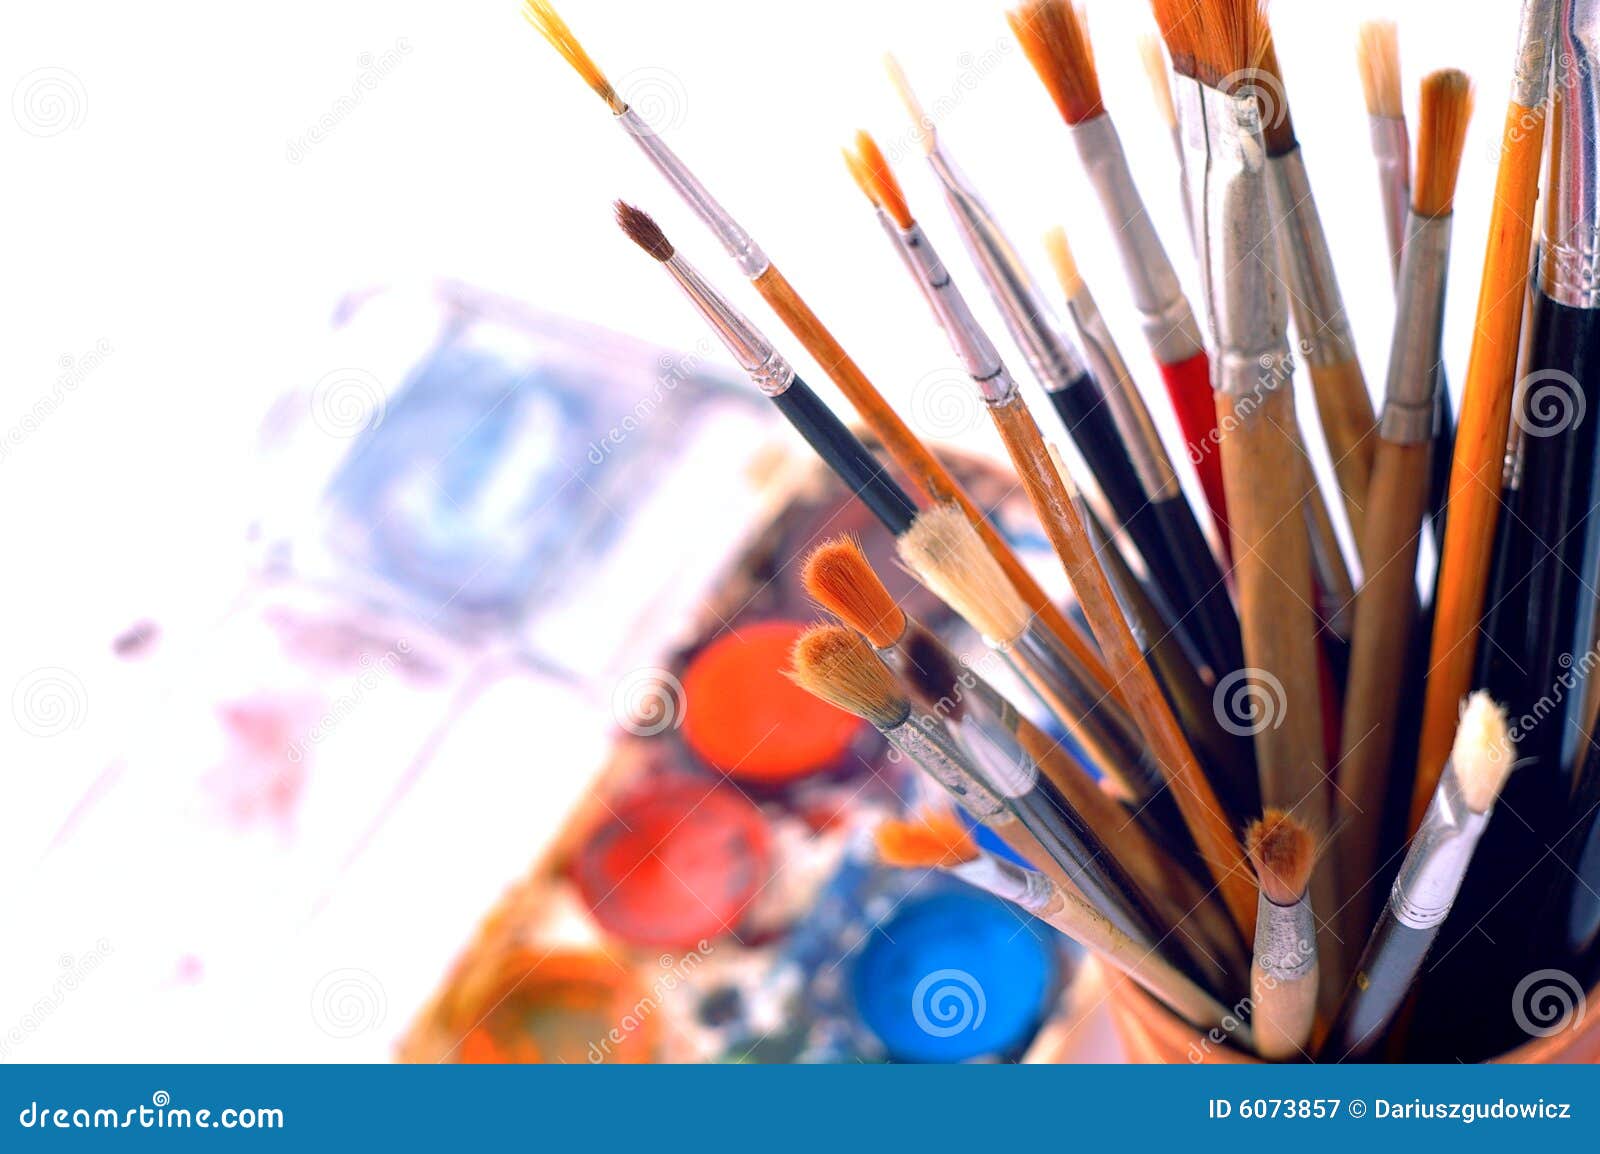 closeup of artist's watercolor paintbox